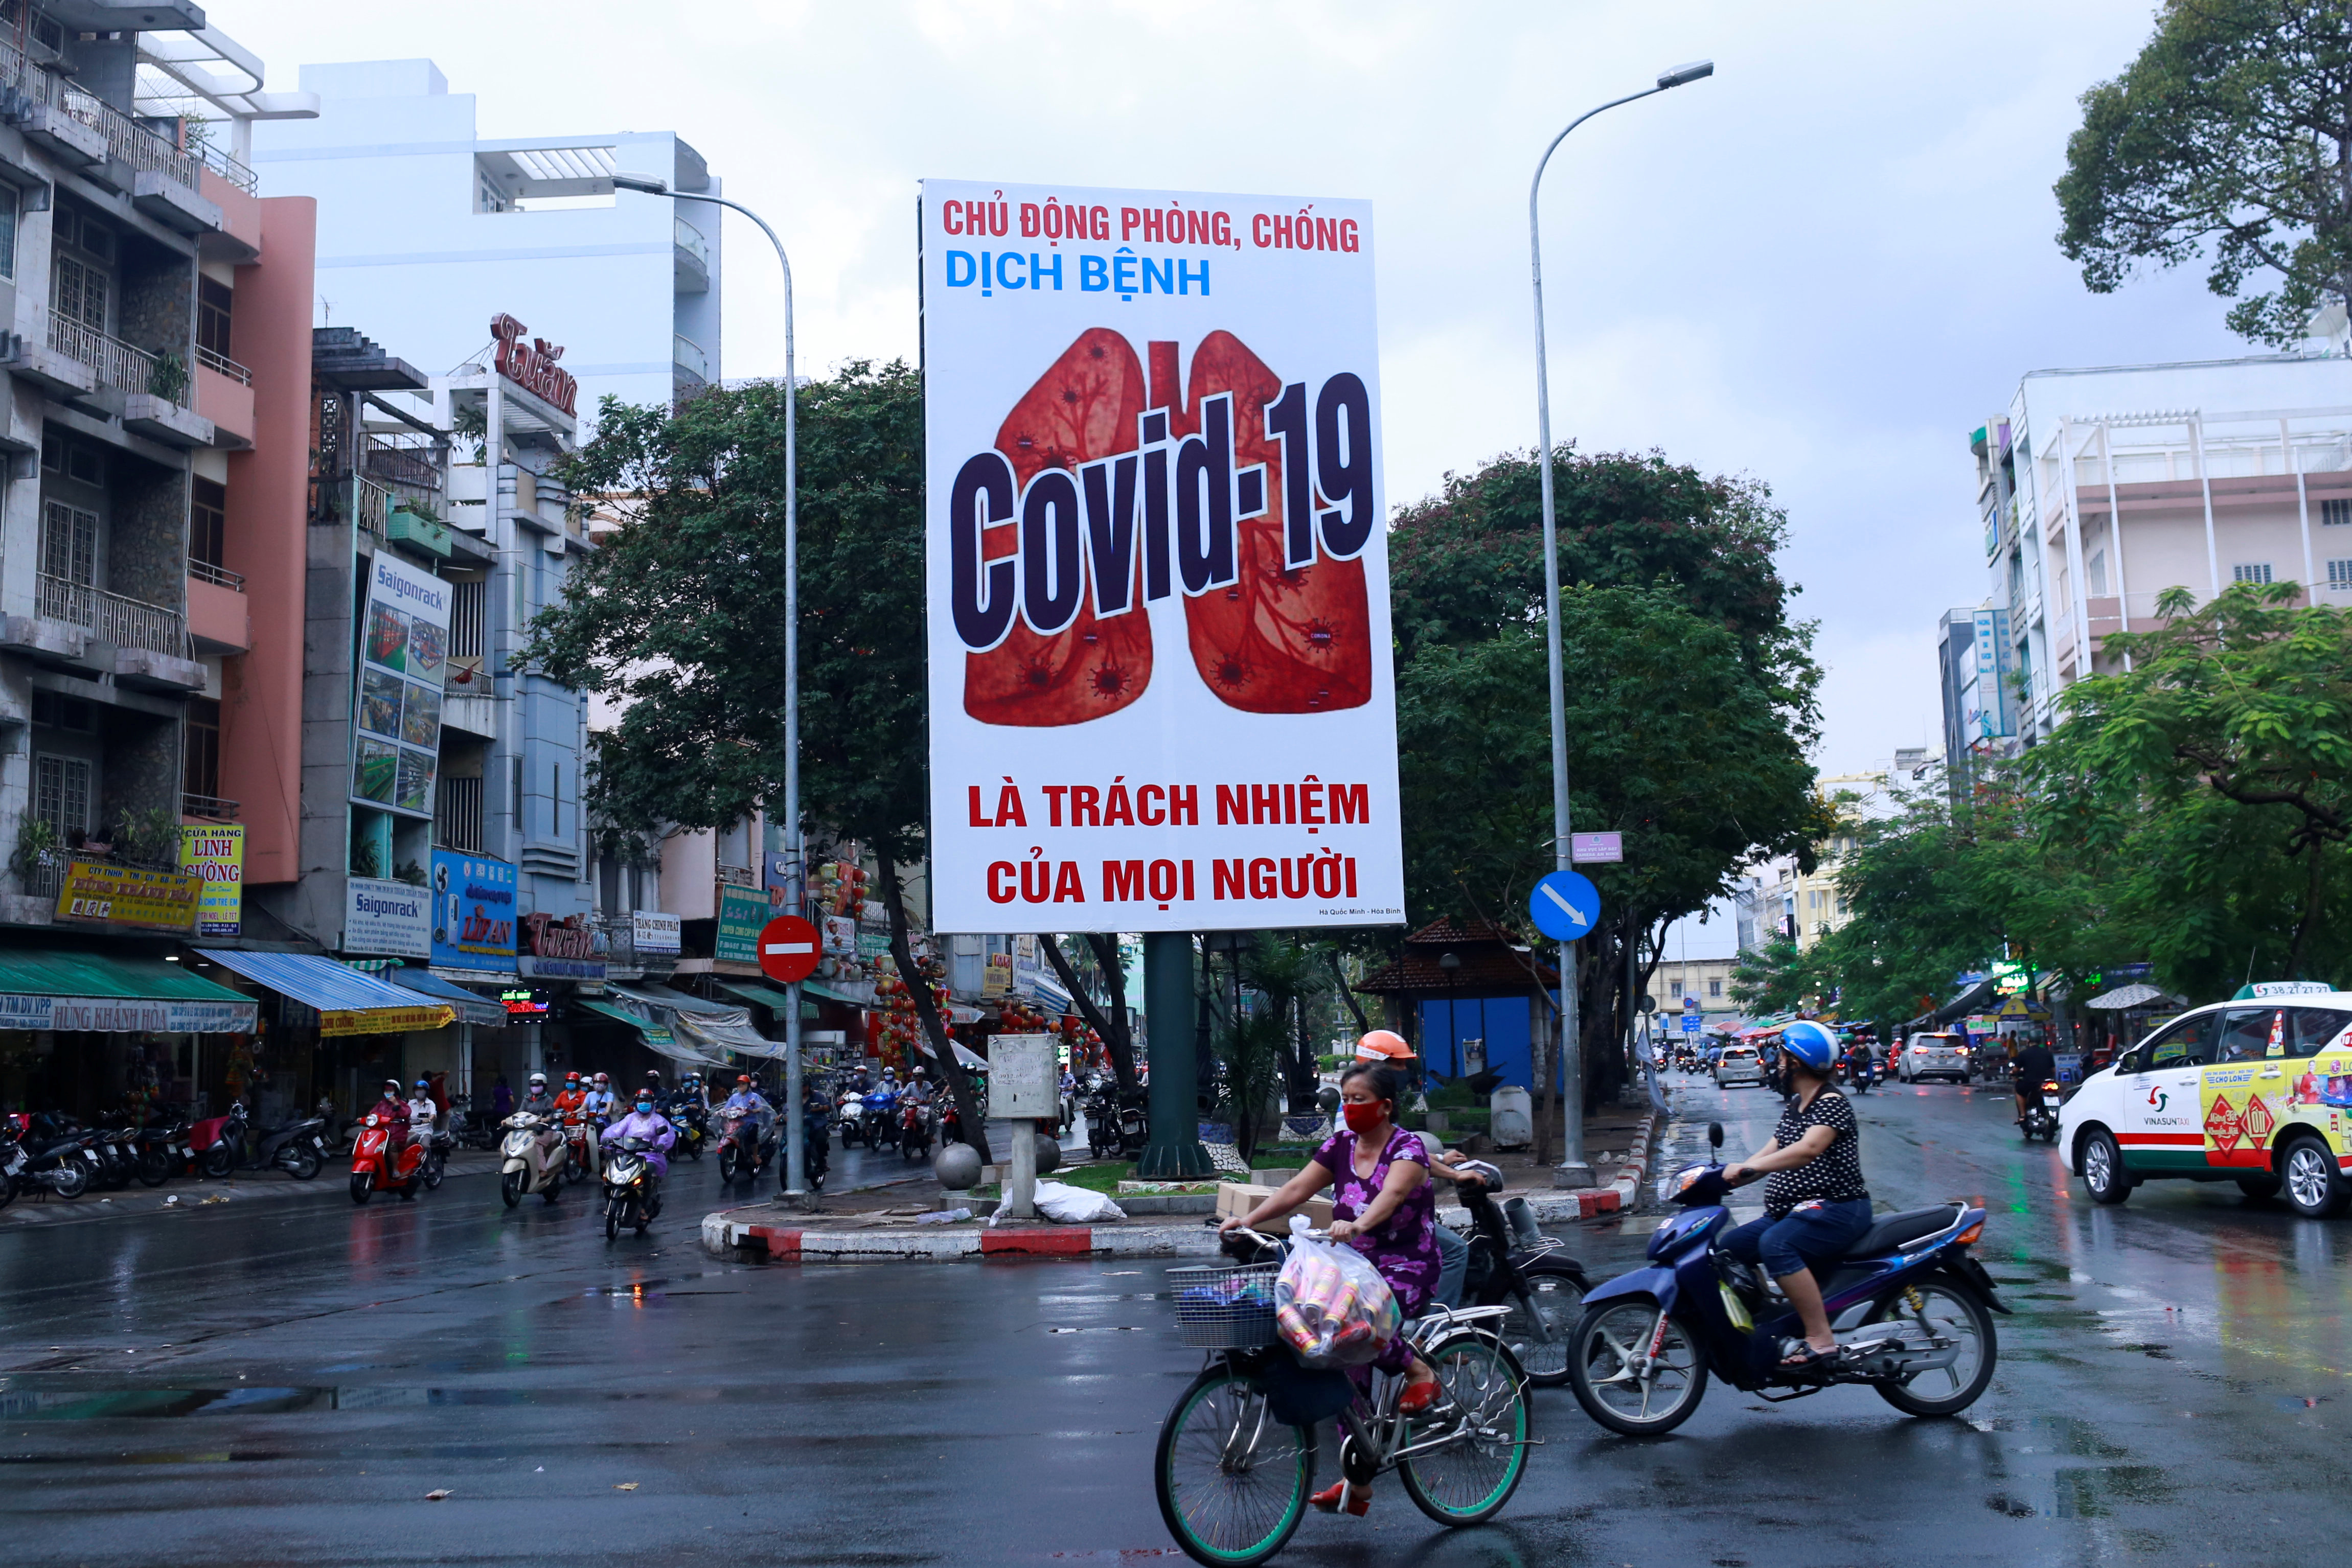 The spread of the coronavirus disease (COVID-19) in Ho Chi Minh